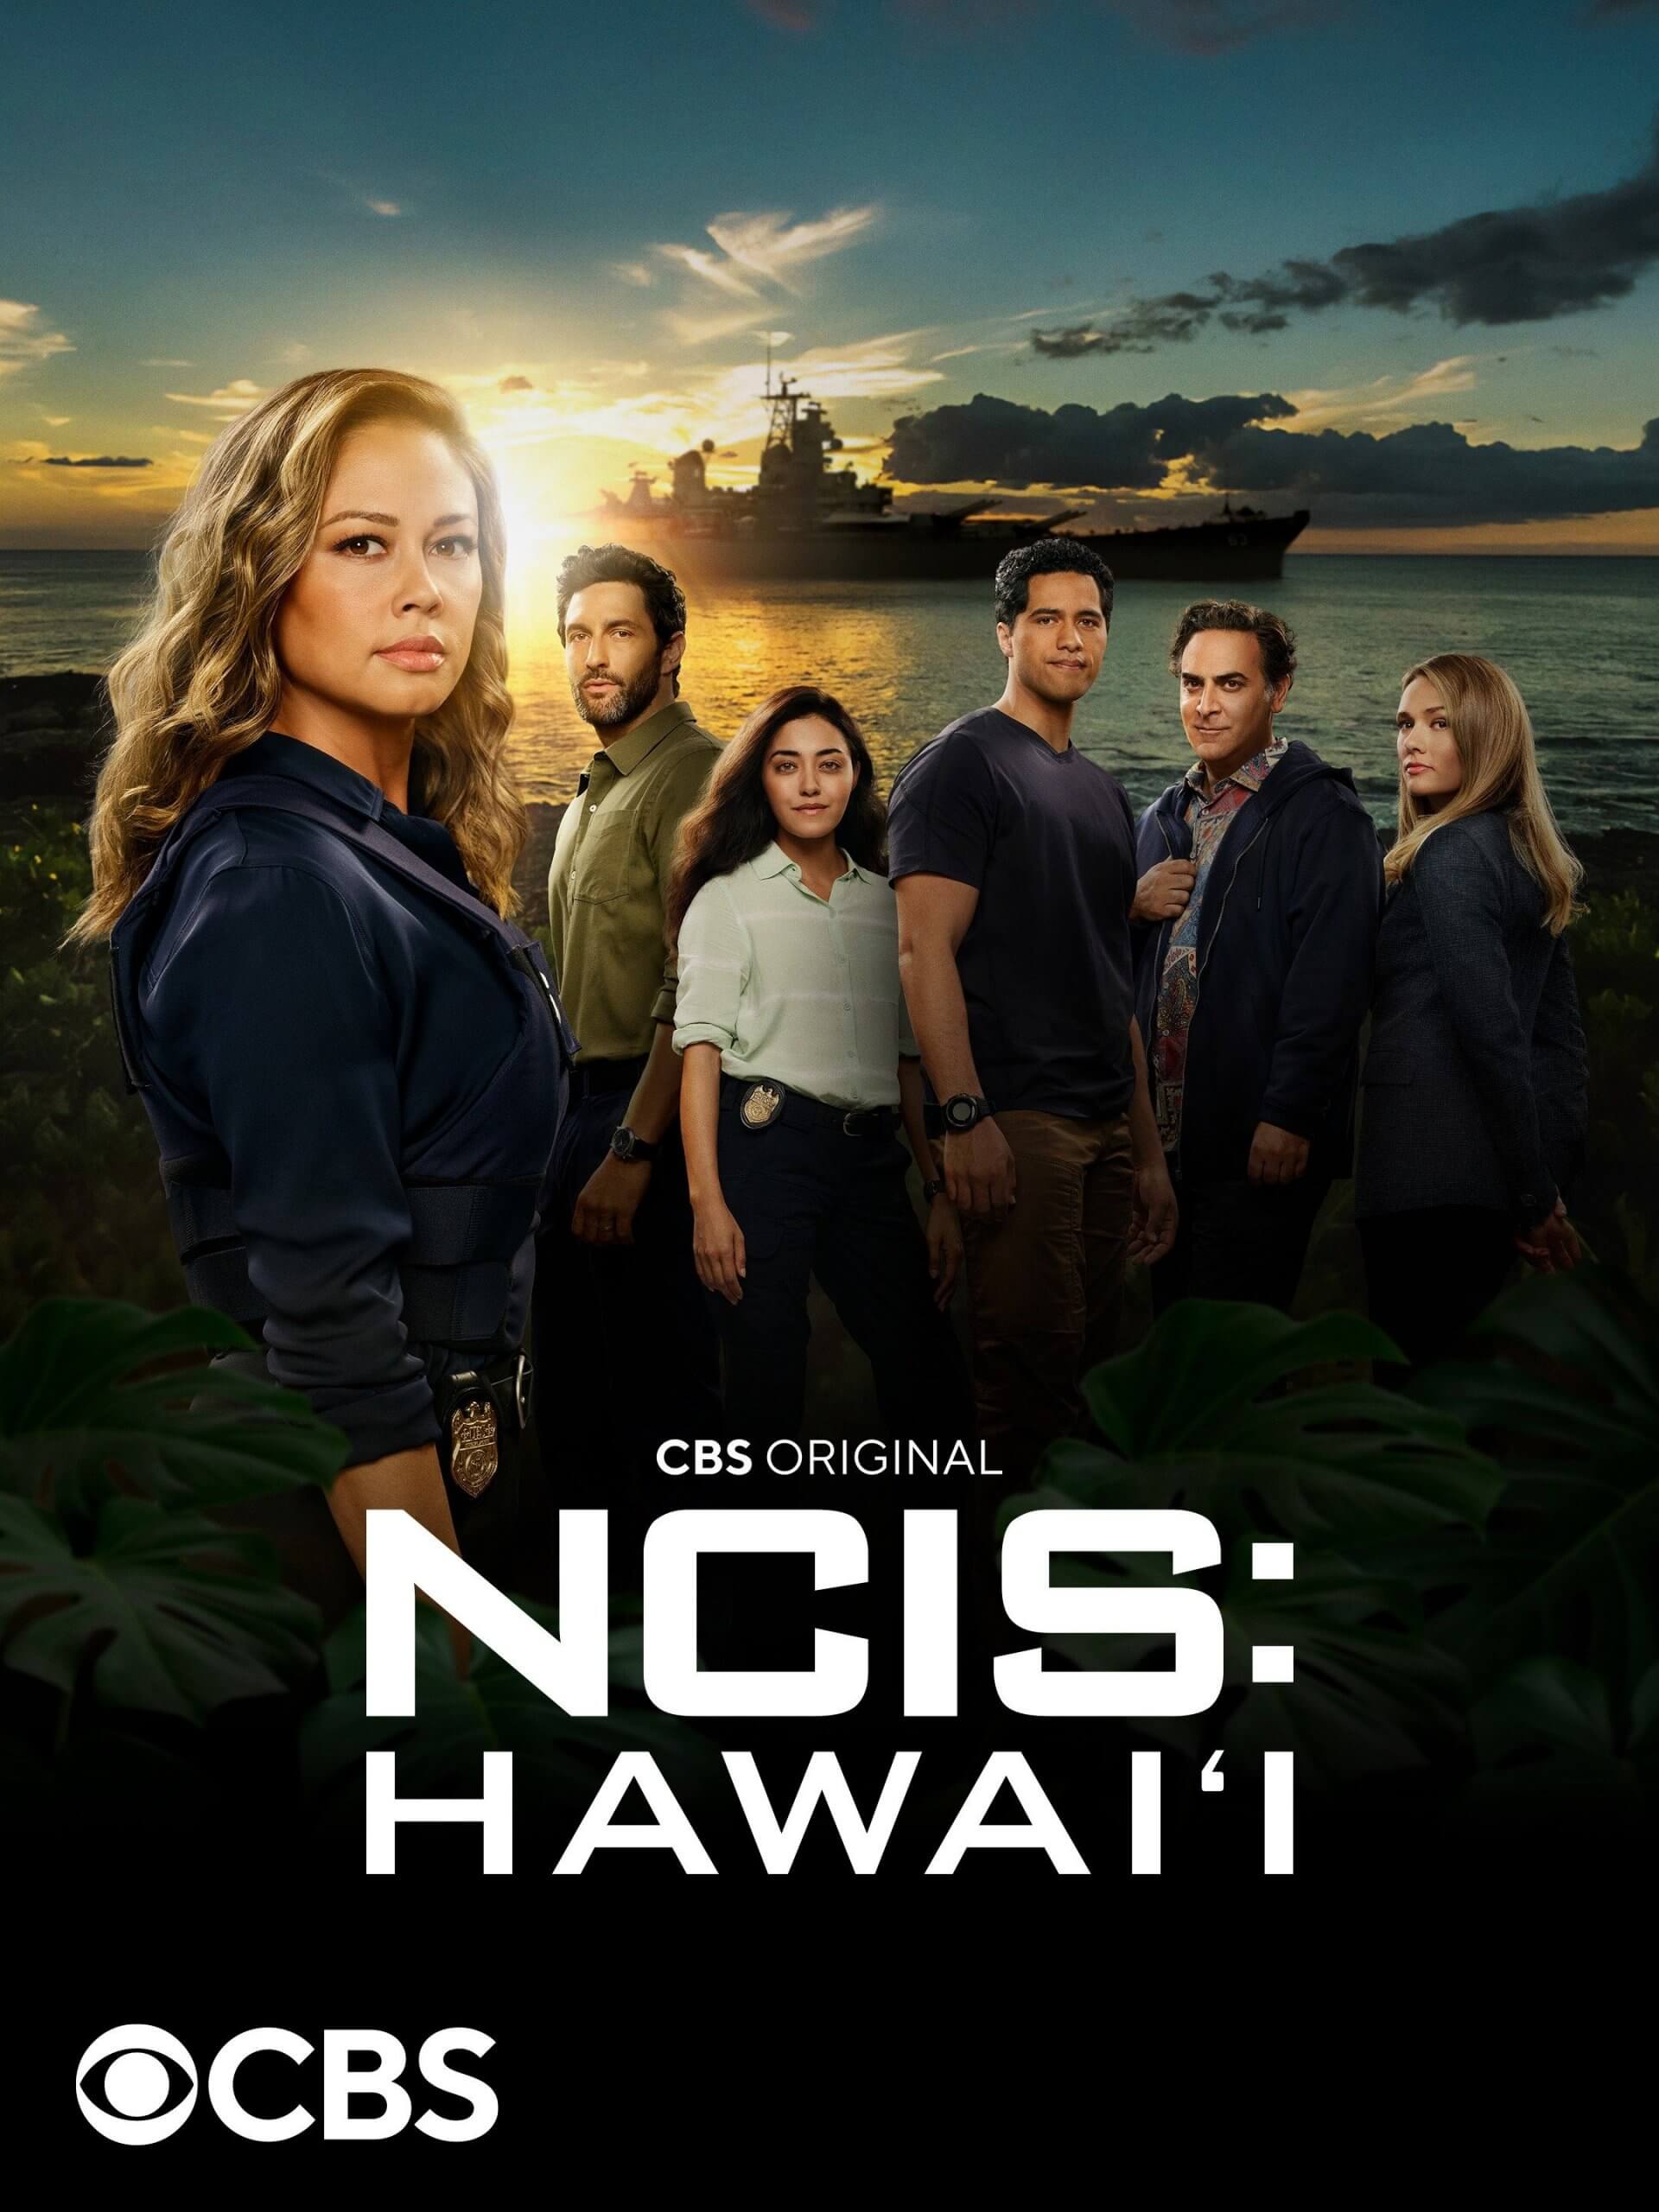 Will there be a NCIS Hawaii Season 3